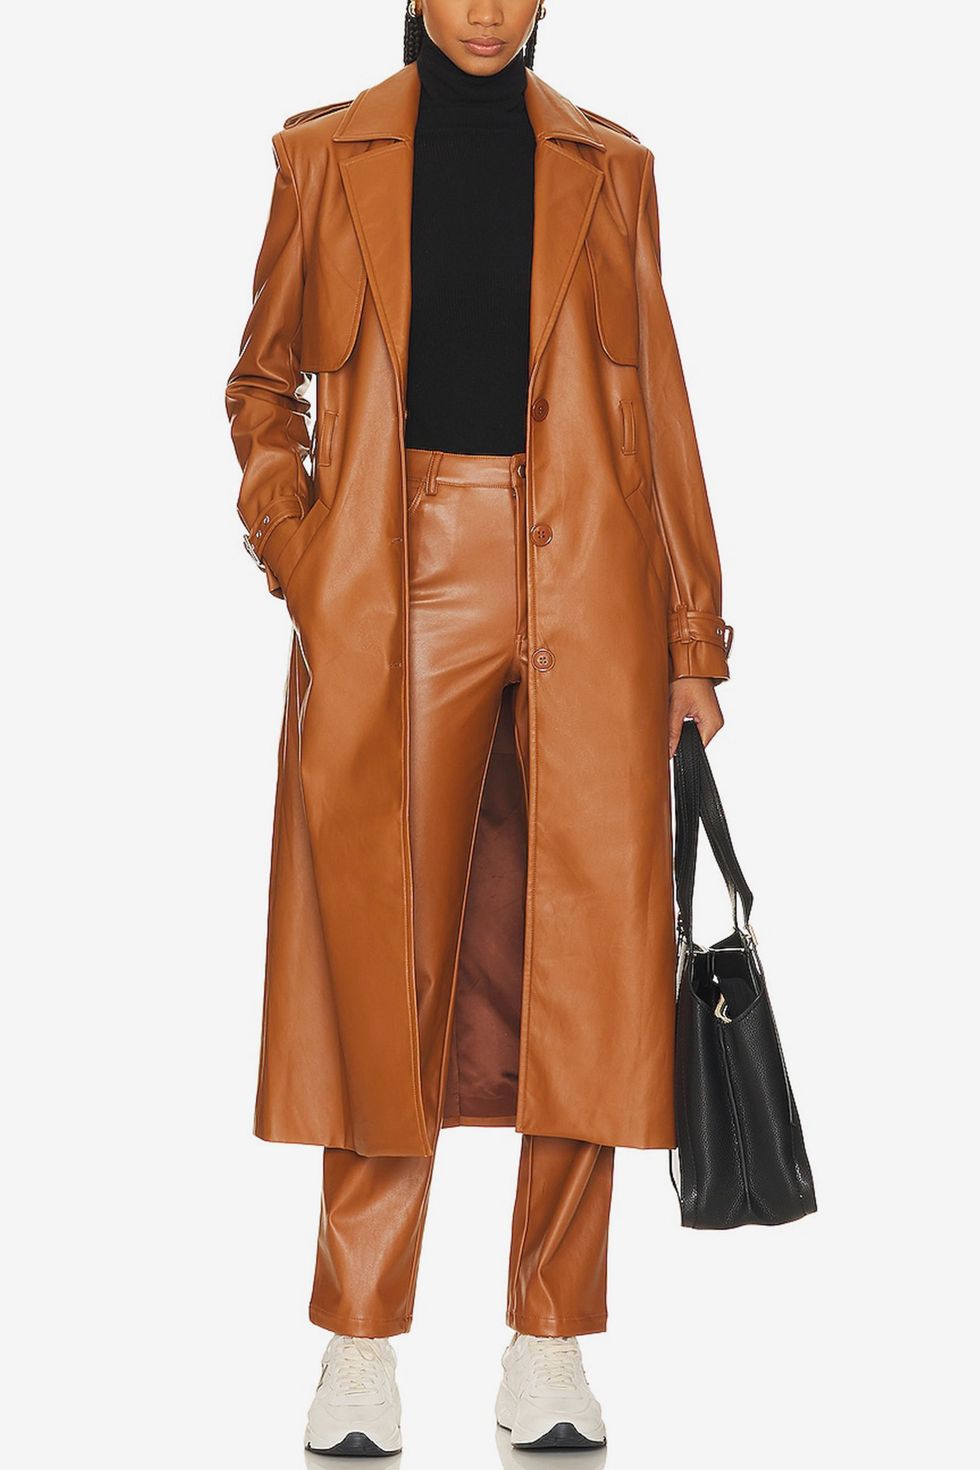 Ladies Regular Fit Burgundy Leather Light Trench Coat